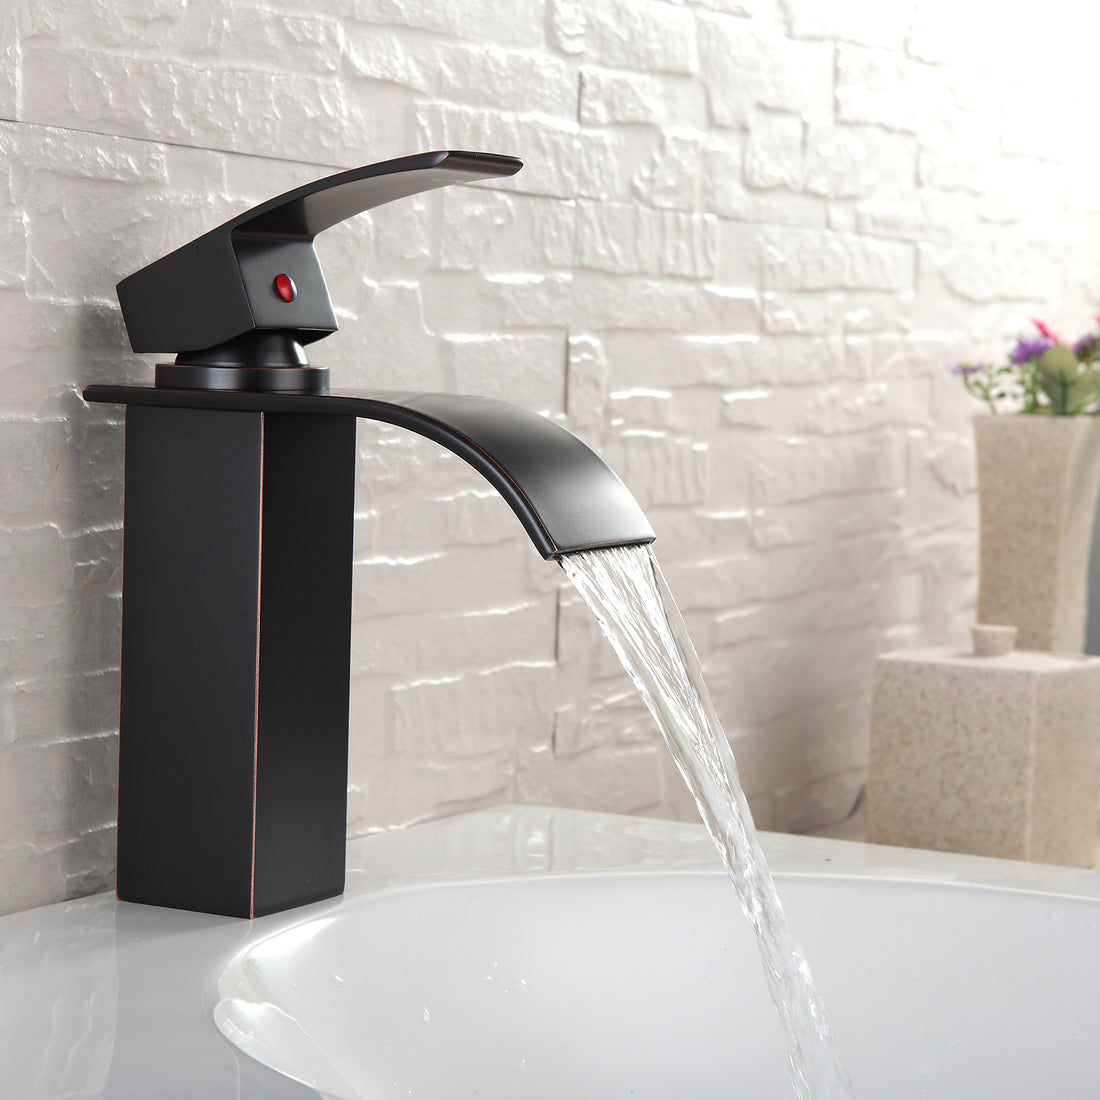 Orb Bathroom Faucet, Faucet For Bathroom Sink,